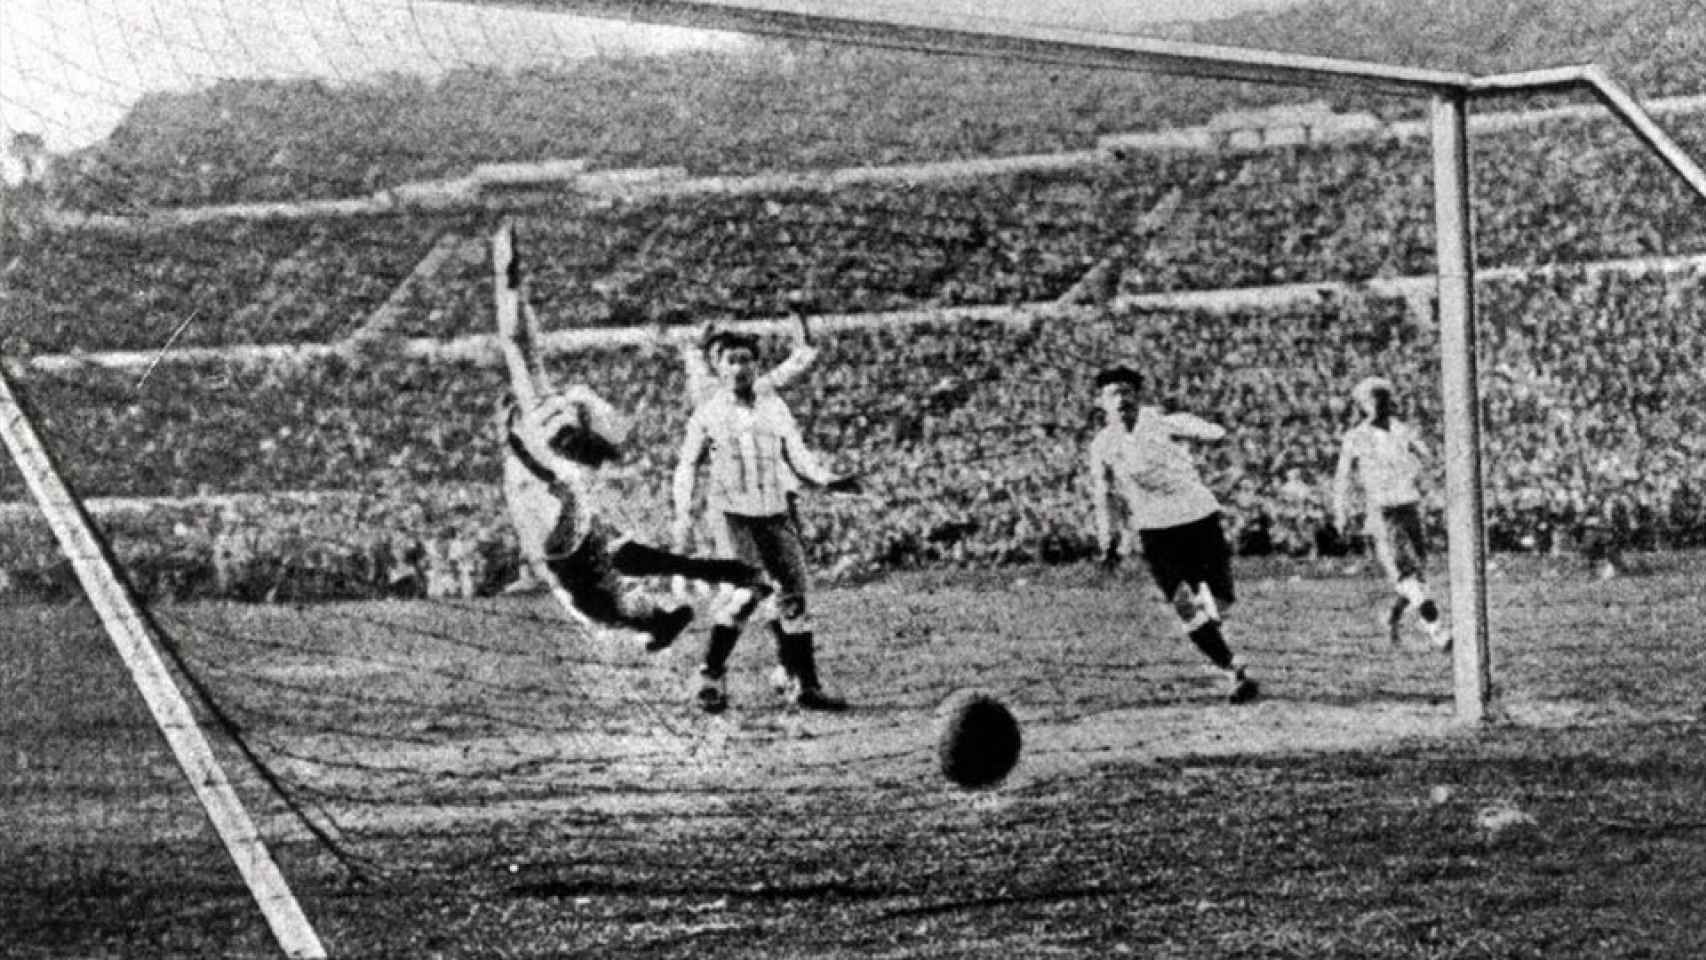 Gol de Uruguay en la final de 1930 que ganó ante Argentina.